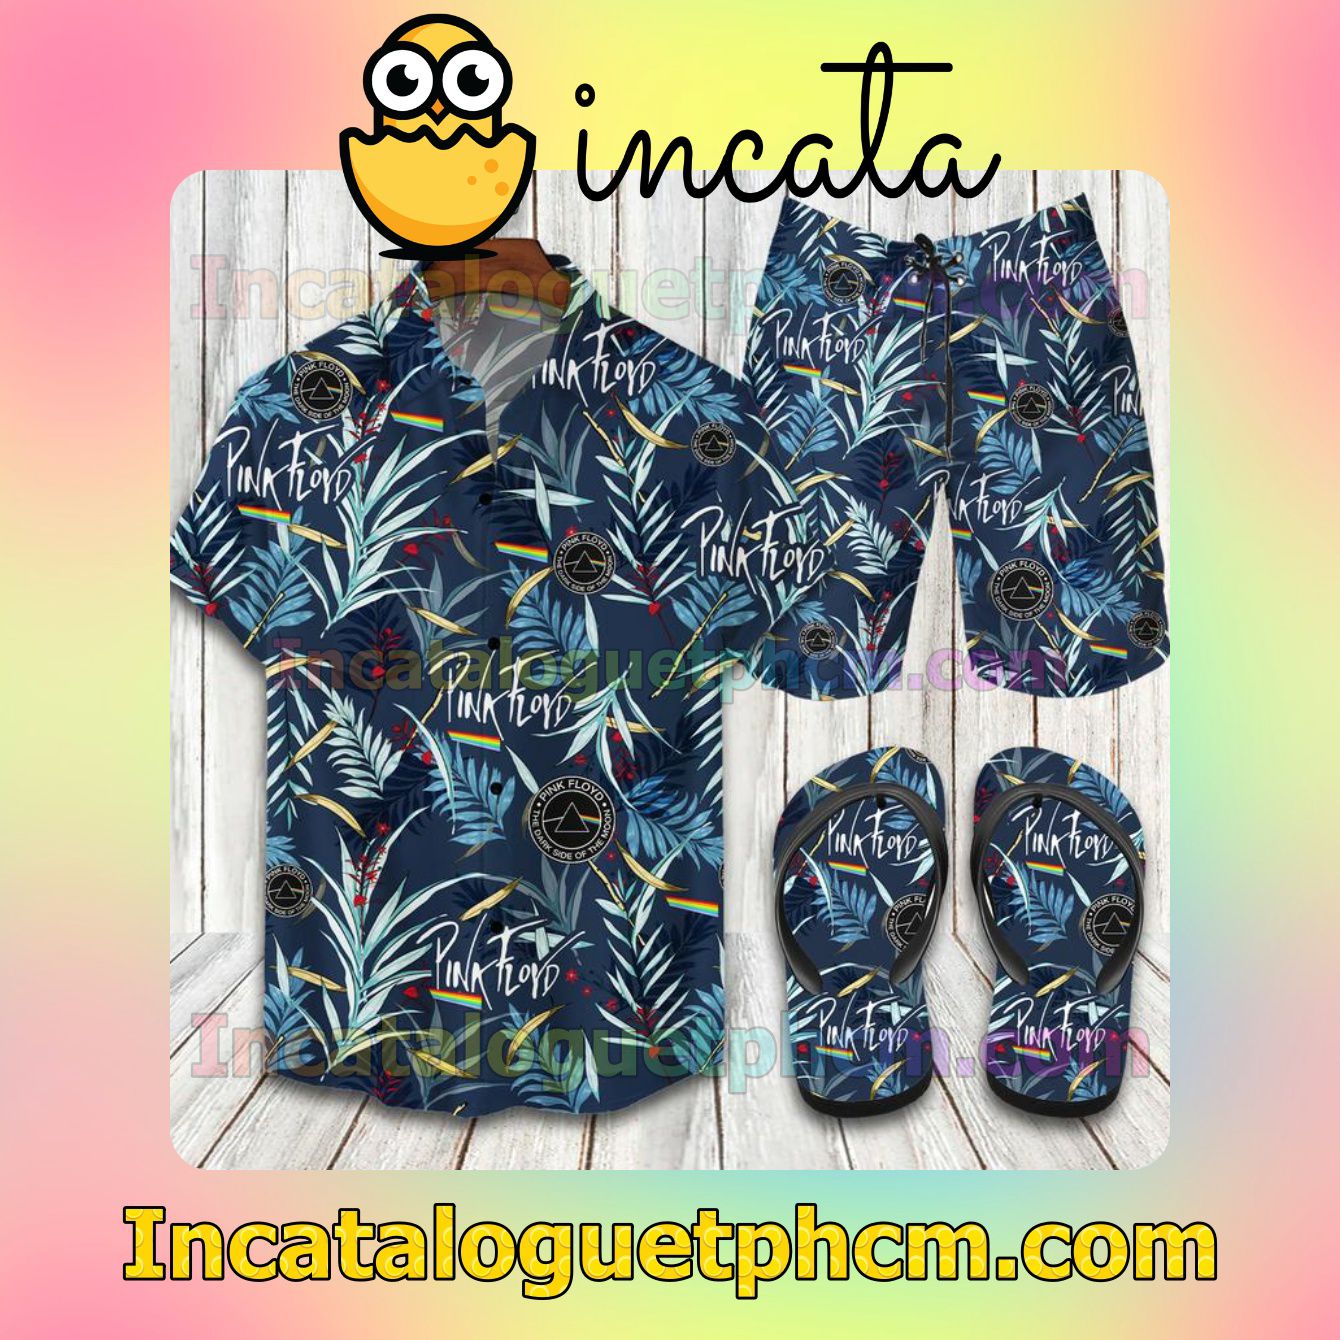 Pink Floyd Aloha Shirt And Shorts